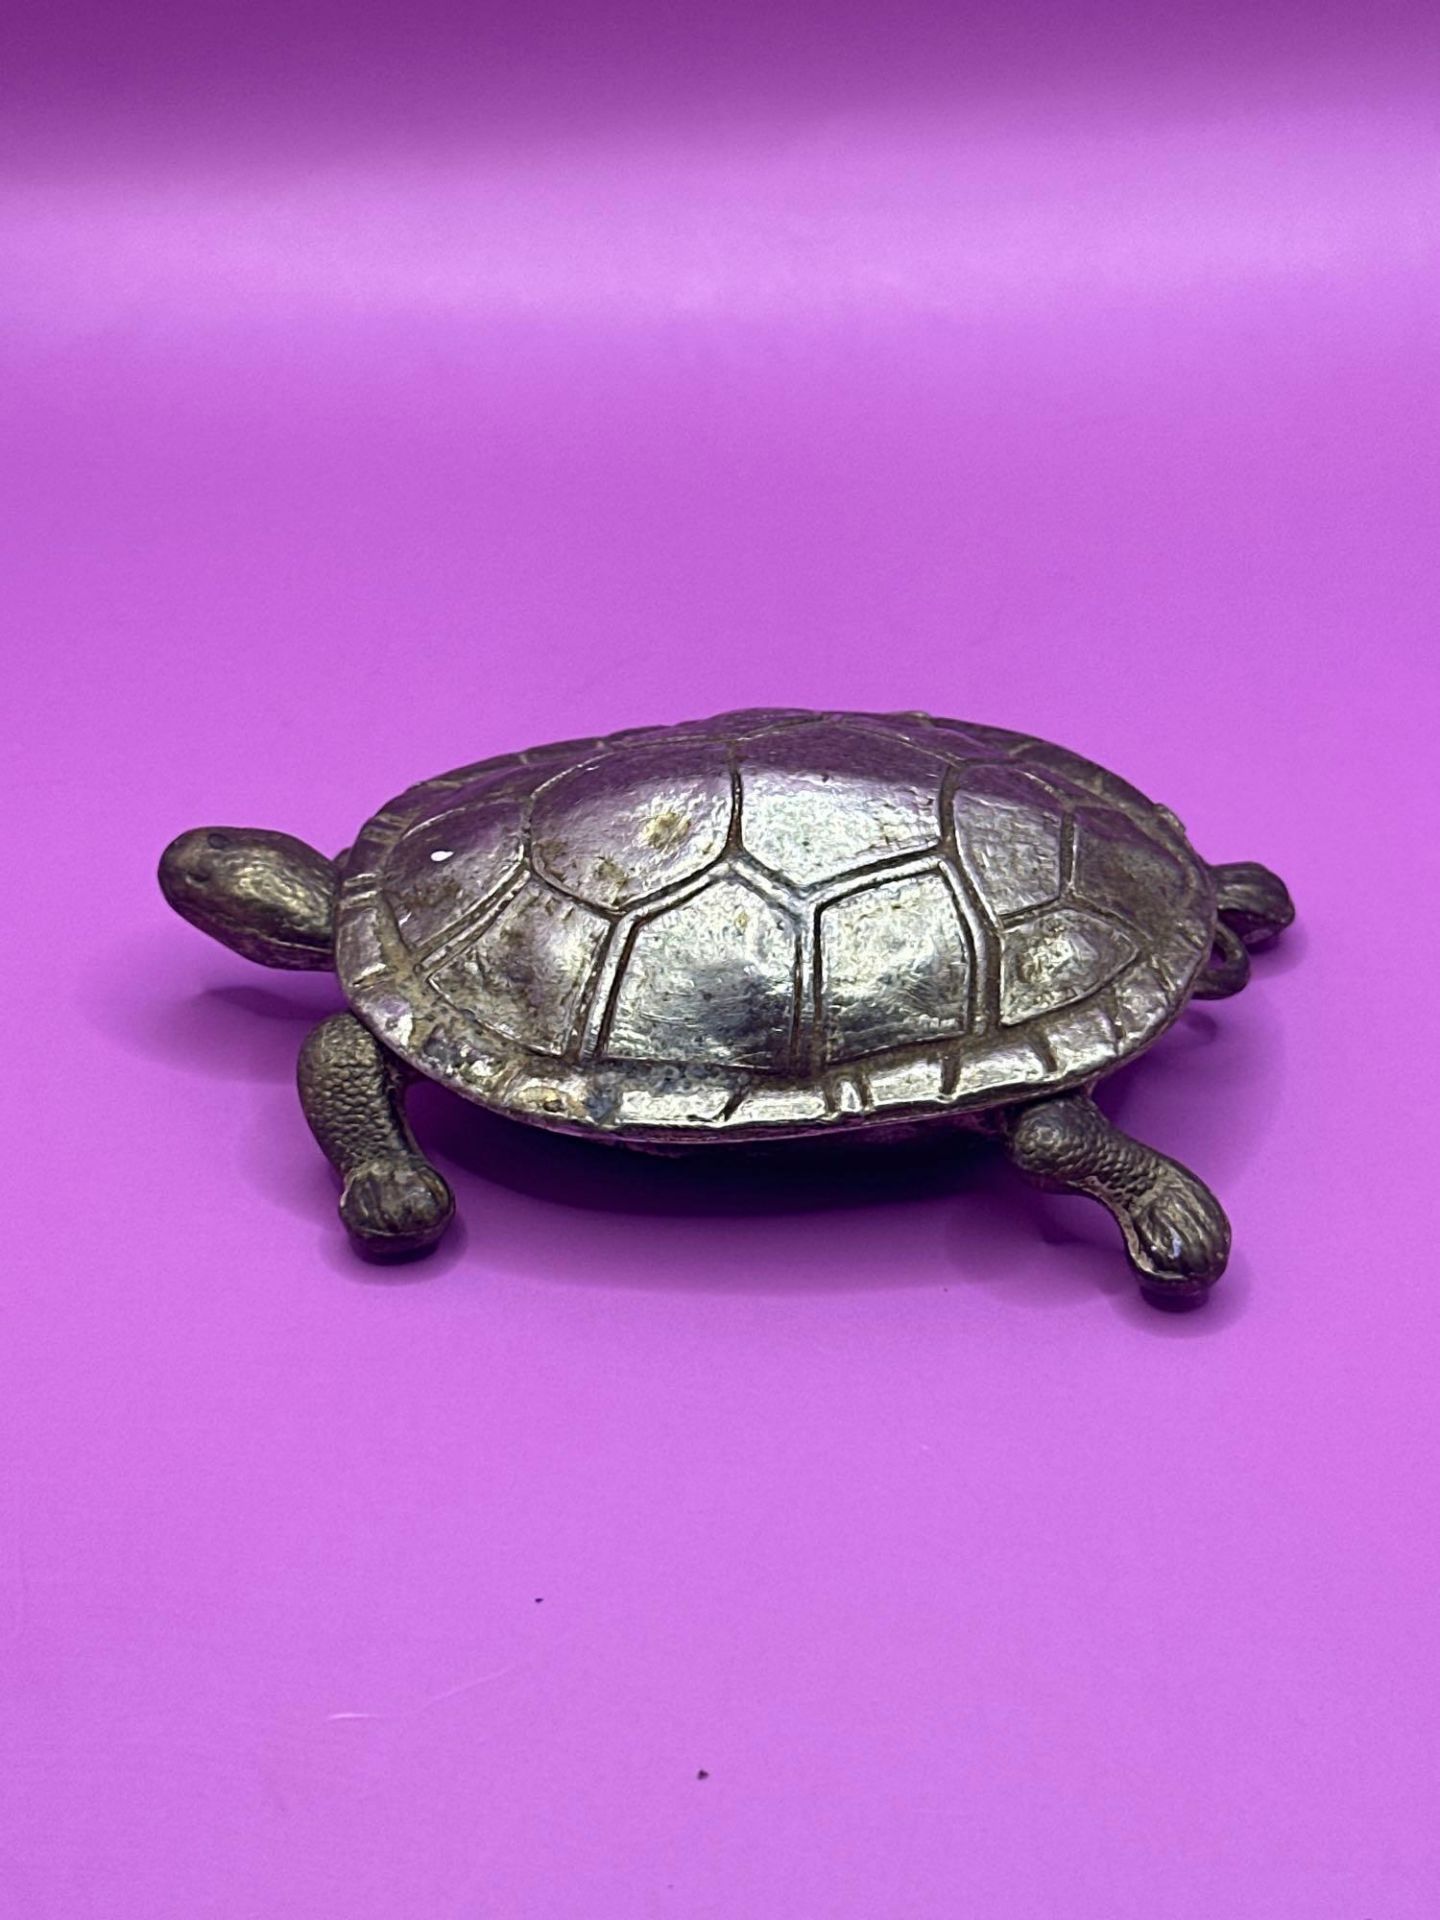 Antique Brass Hinged Turtle/Tortoise Pin Box, Pill Box, Trinket Box, Reg No 939427. 11cm